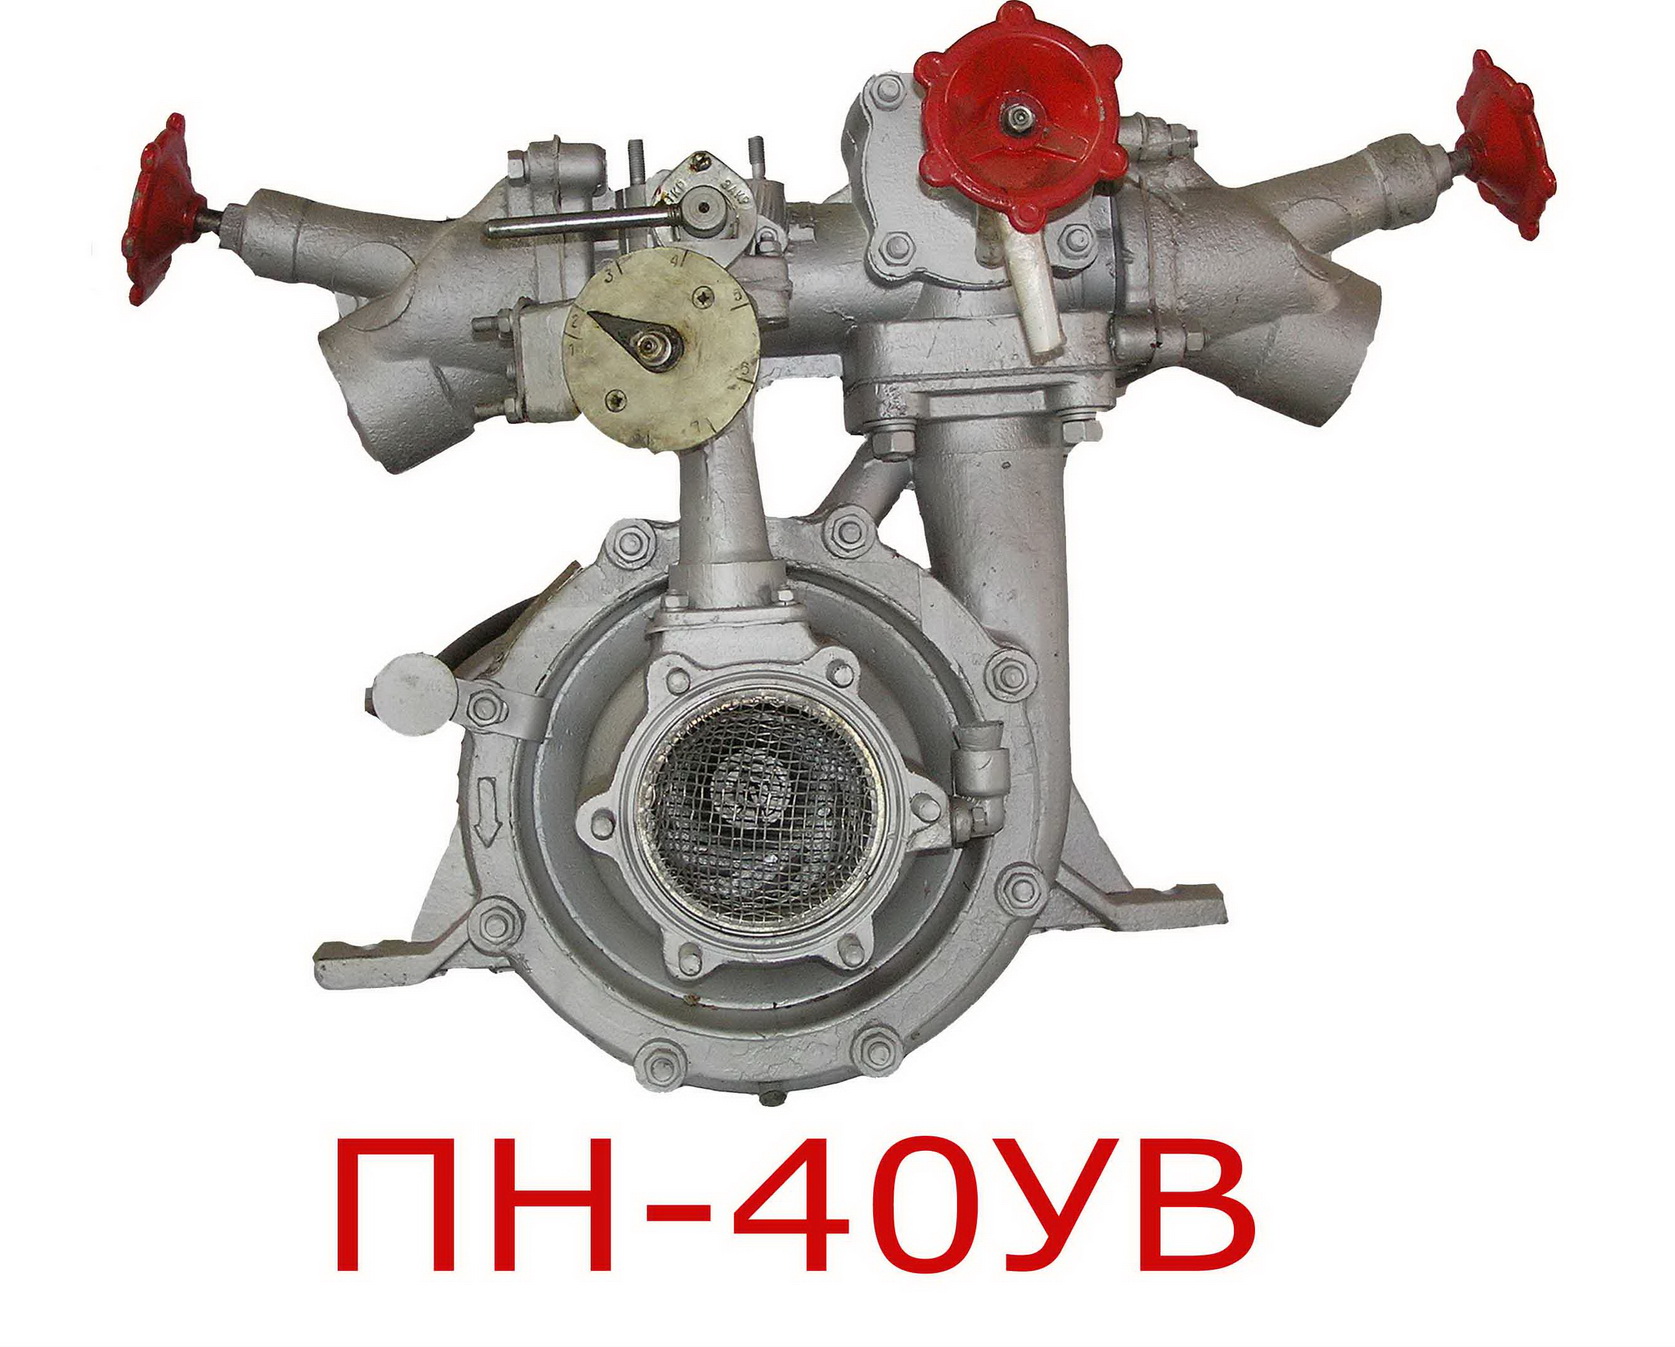 Насос ПН-40УВ